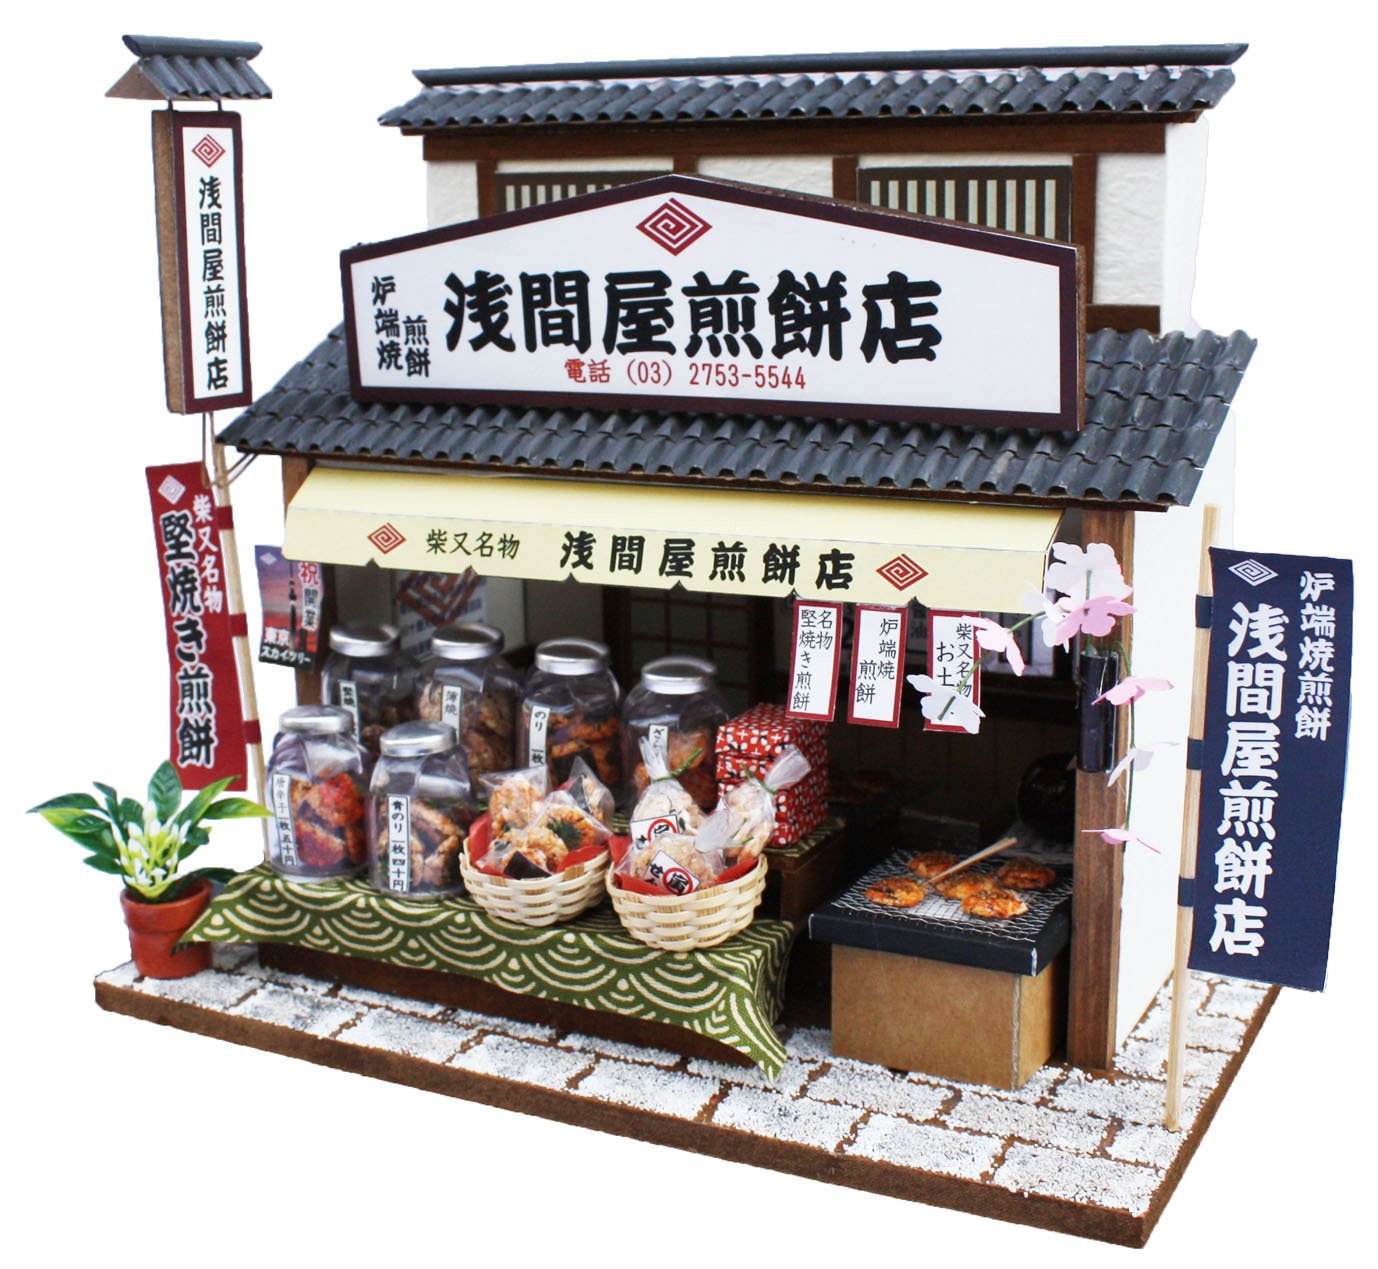 Rice cracker shop 8832 well-established kit Shibamata of Billy handmade dollhouse kit Shibamata (japan import) by Billy 55